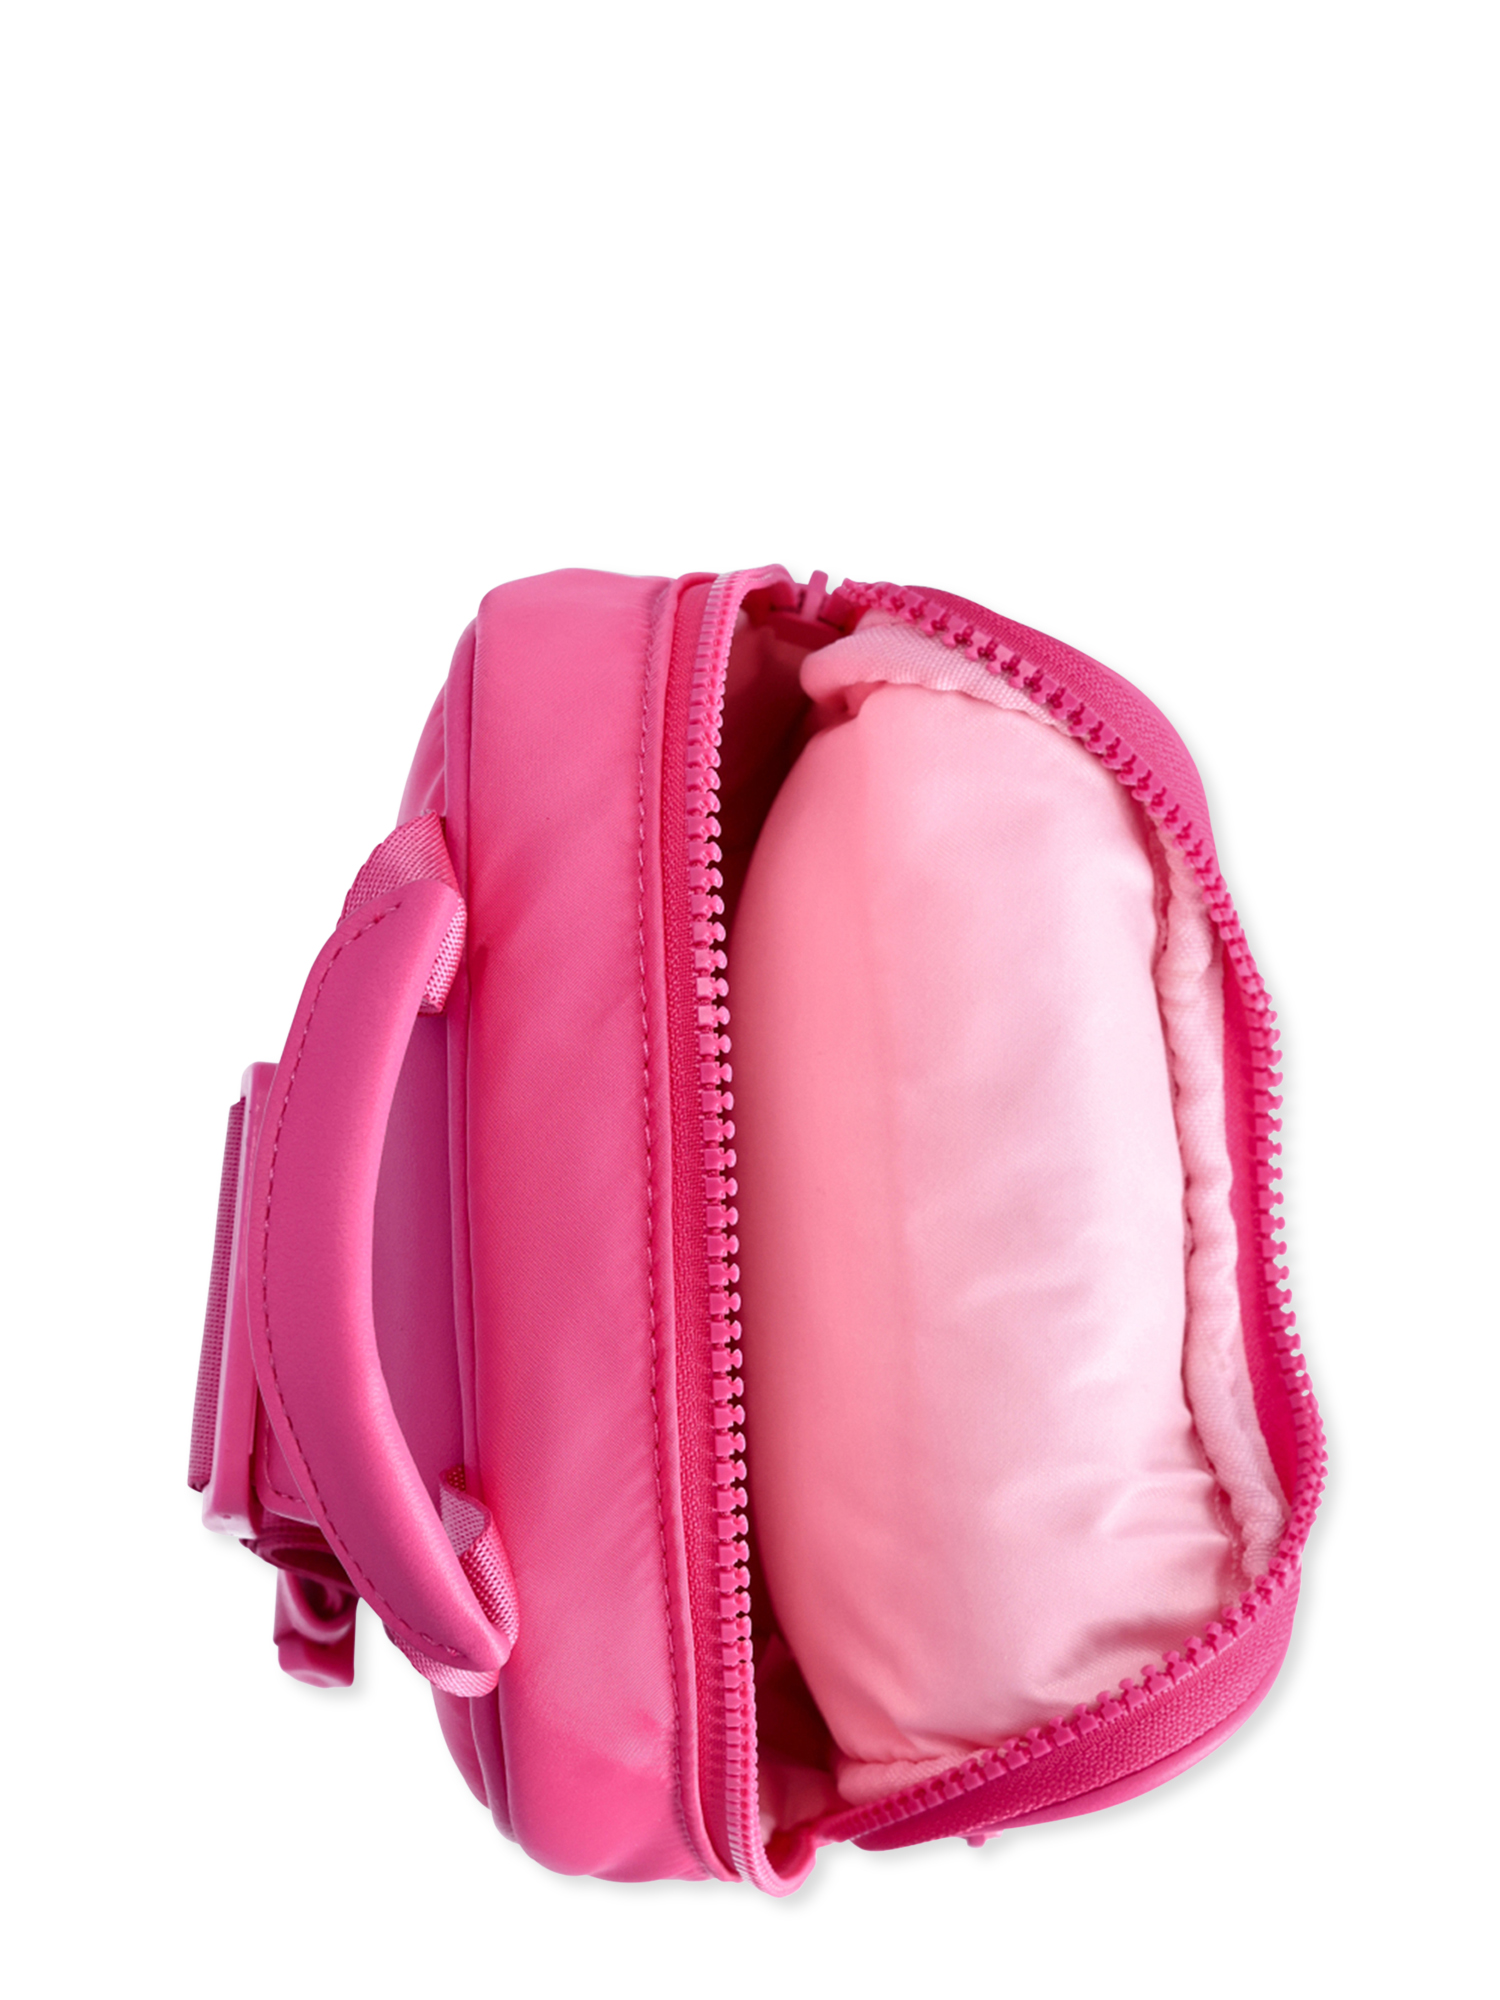 No Boundaries Women's Hands-Free Sling Bag, Bright Flamingo - image 5 of 6